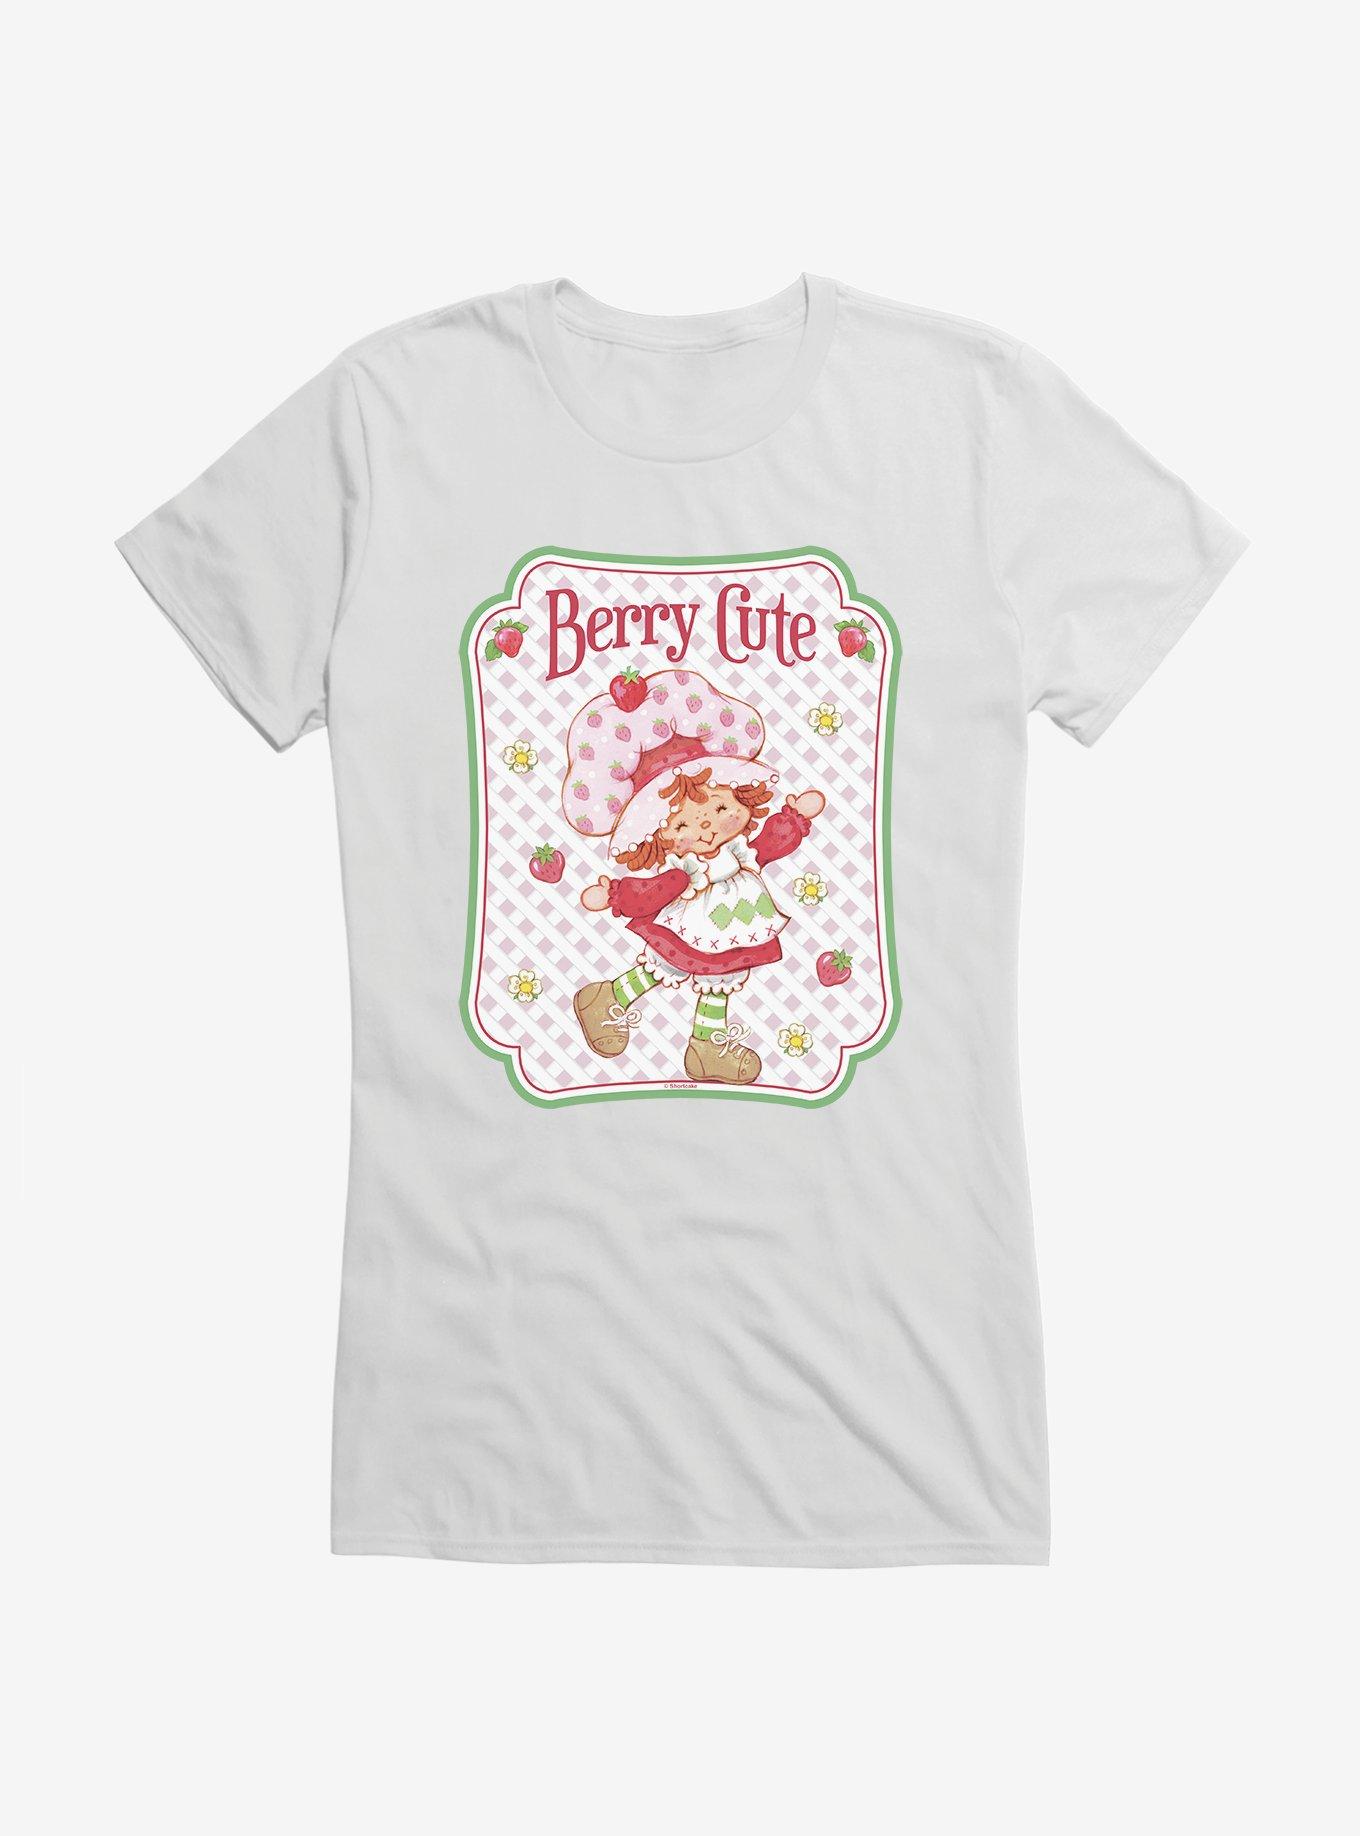 Strawberry Shortcake Berry Cute Girls T-Shirt